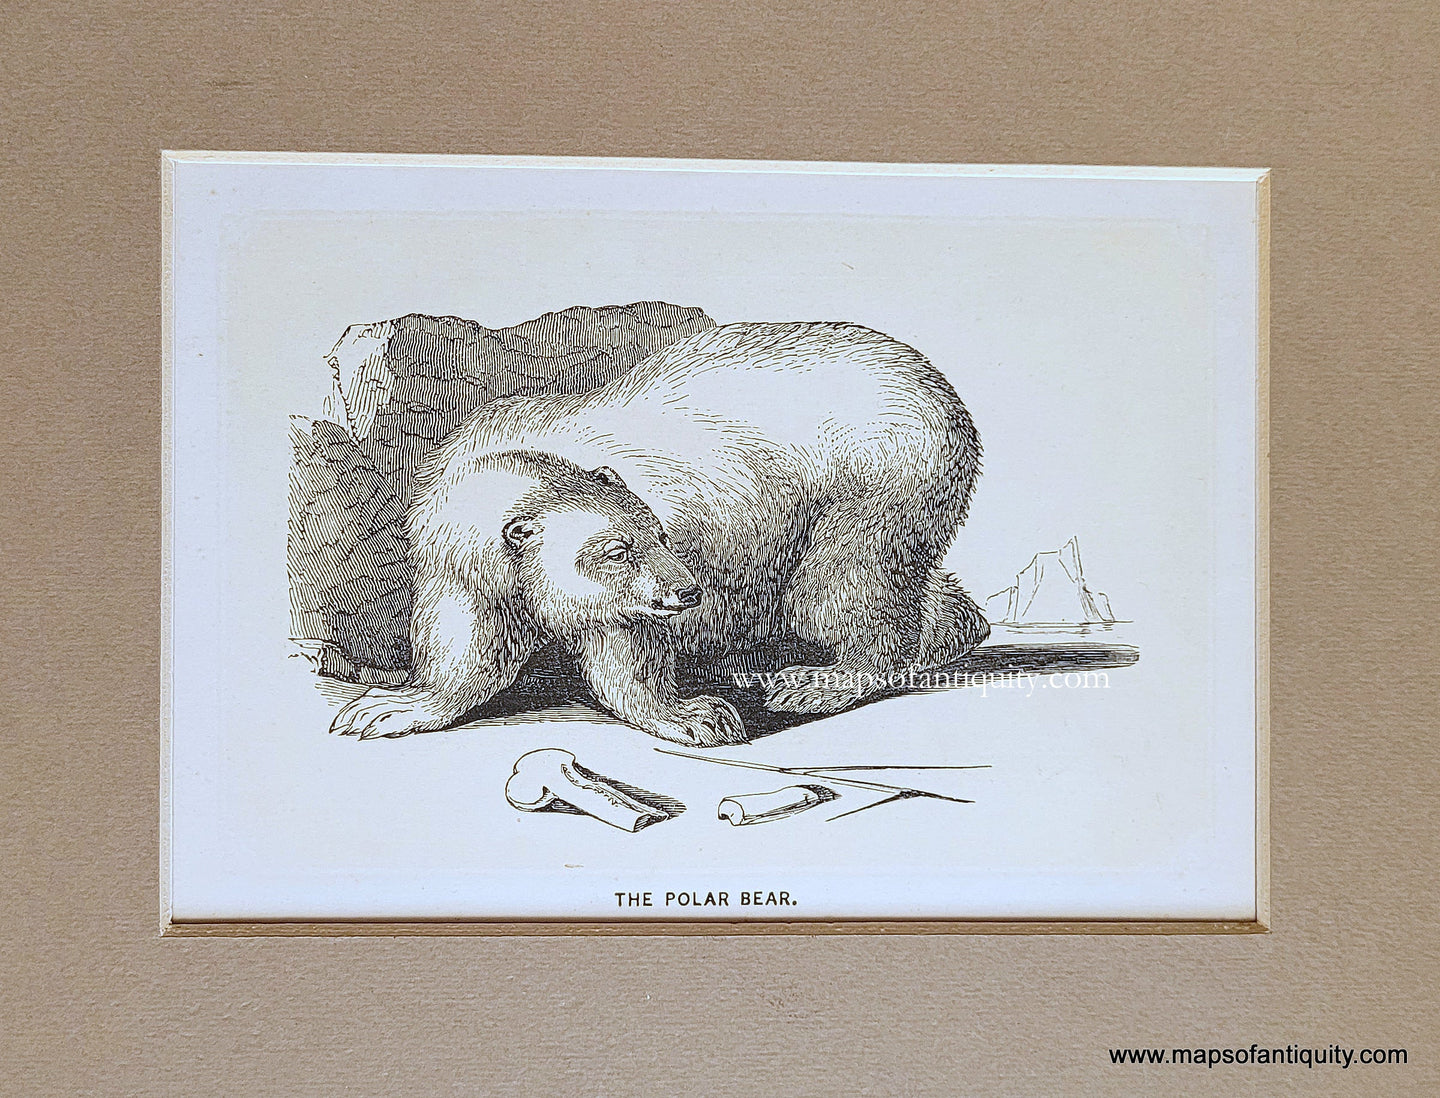 Genuine-Antique-Print-The-Polar-Bear-1850s-Tallis-Maps-Of-Antiquity